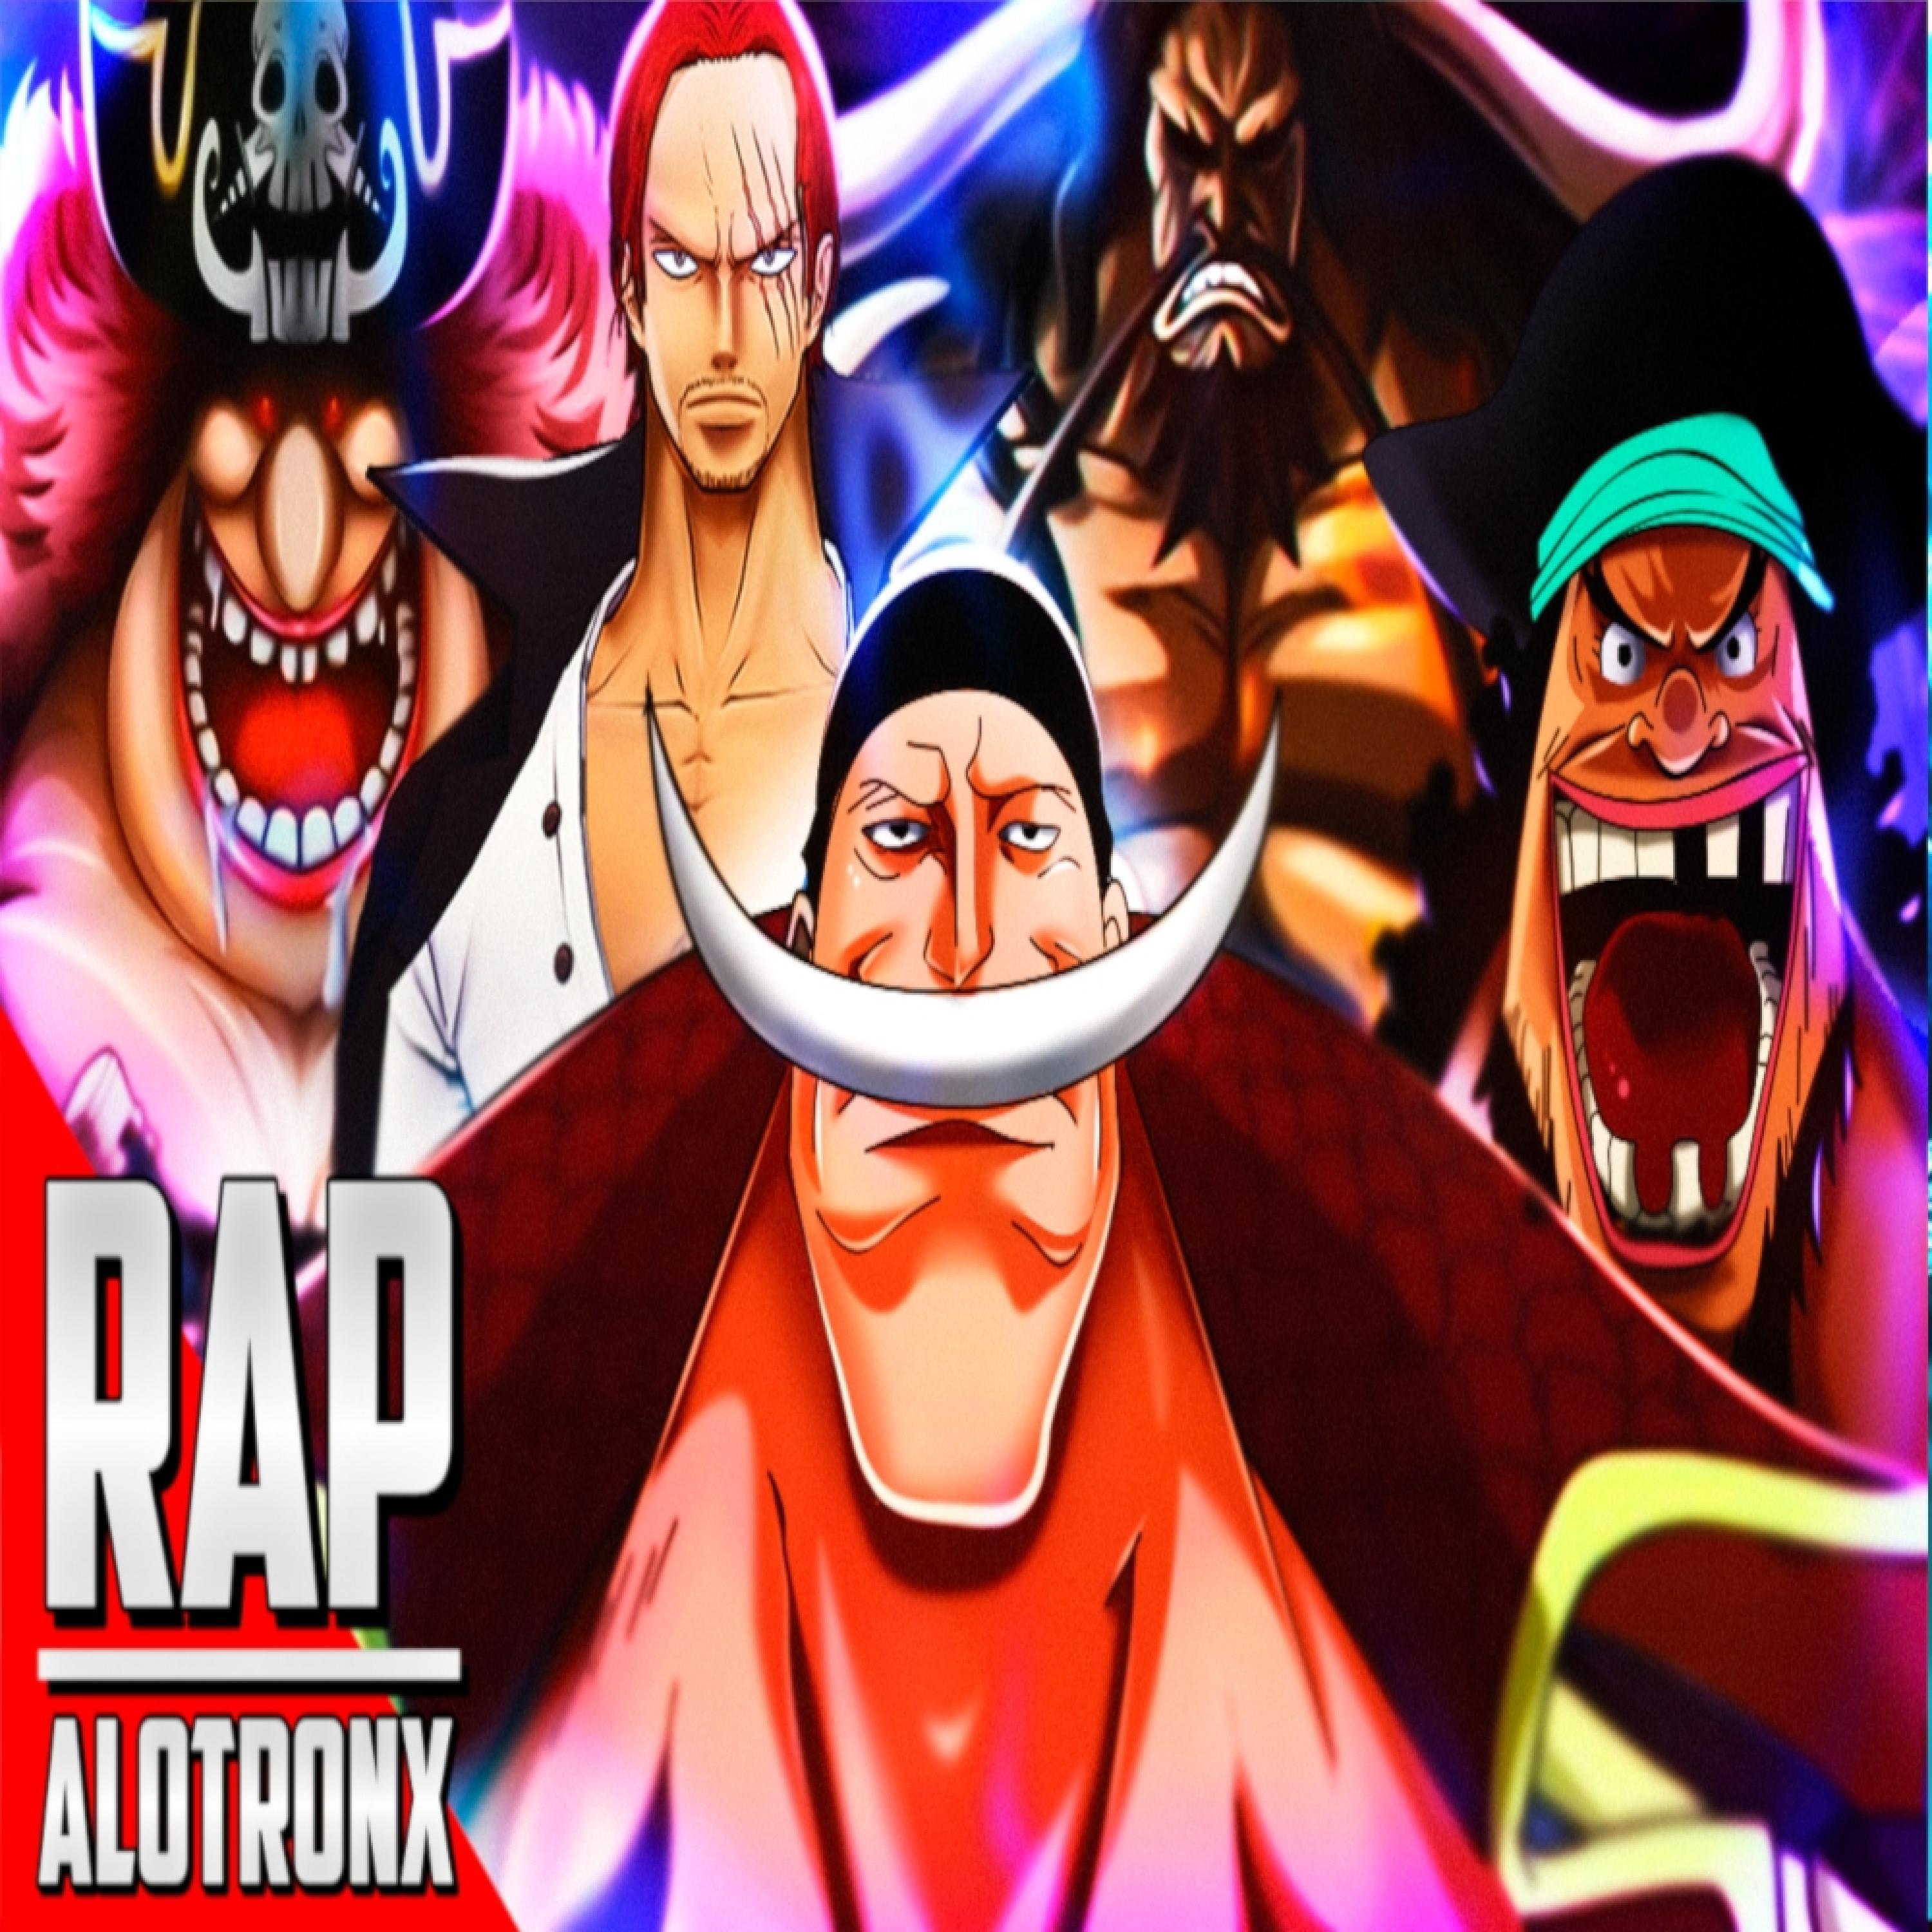 AlotronX - Yonkou Macro Rap (Conquistadores) (feat. Keyto, SoulRap, Kballero Rap, Vaixer & Melanie Estrella)